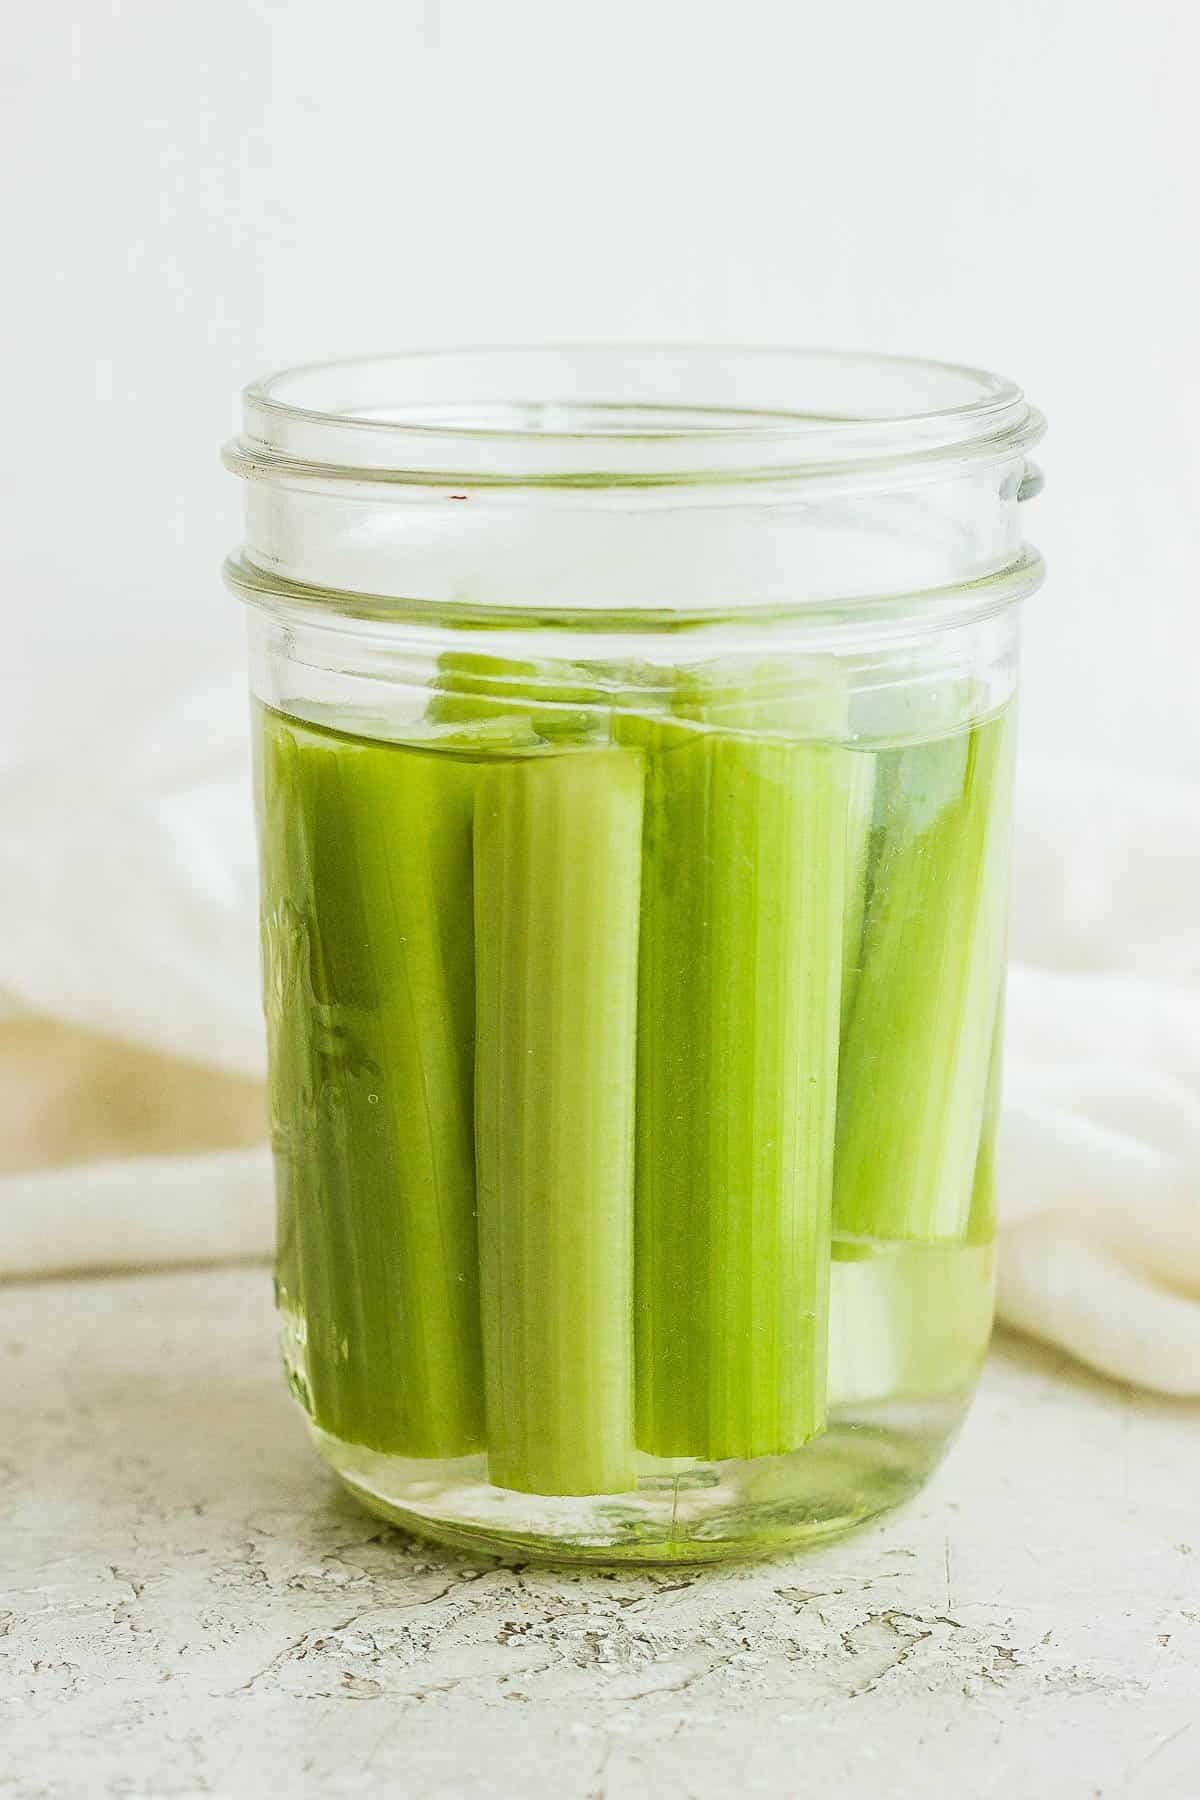 Jar of celery sticks submerged in water.